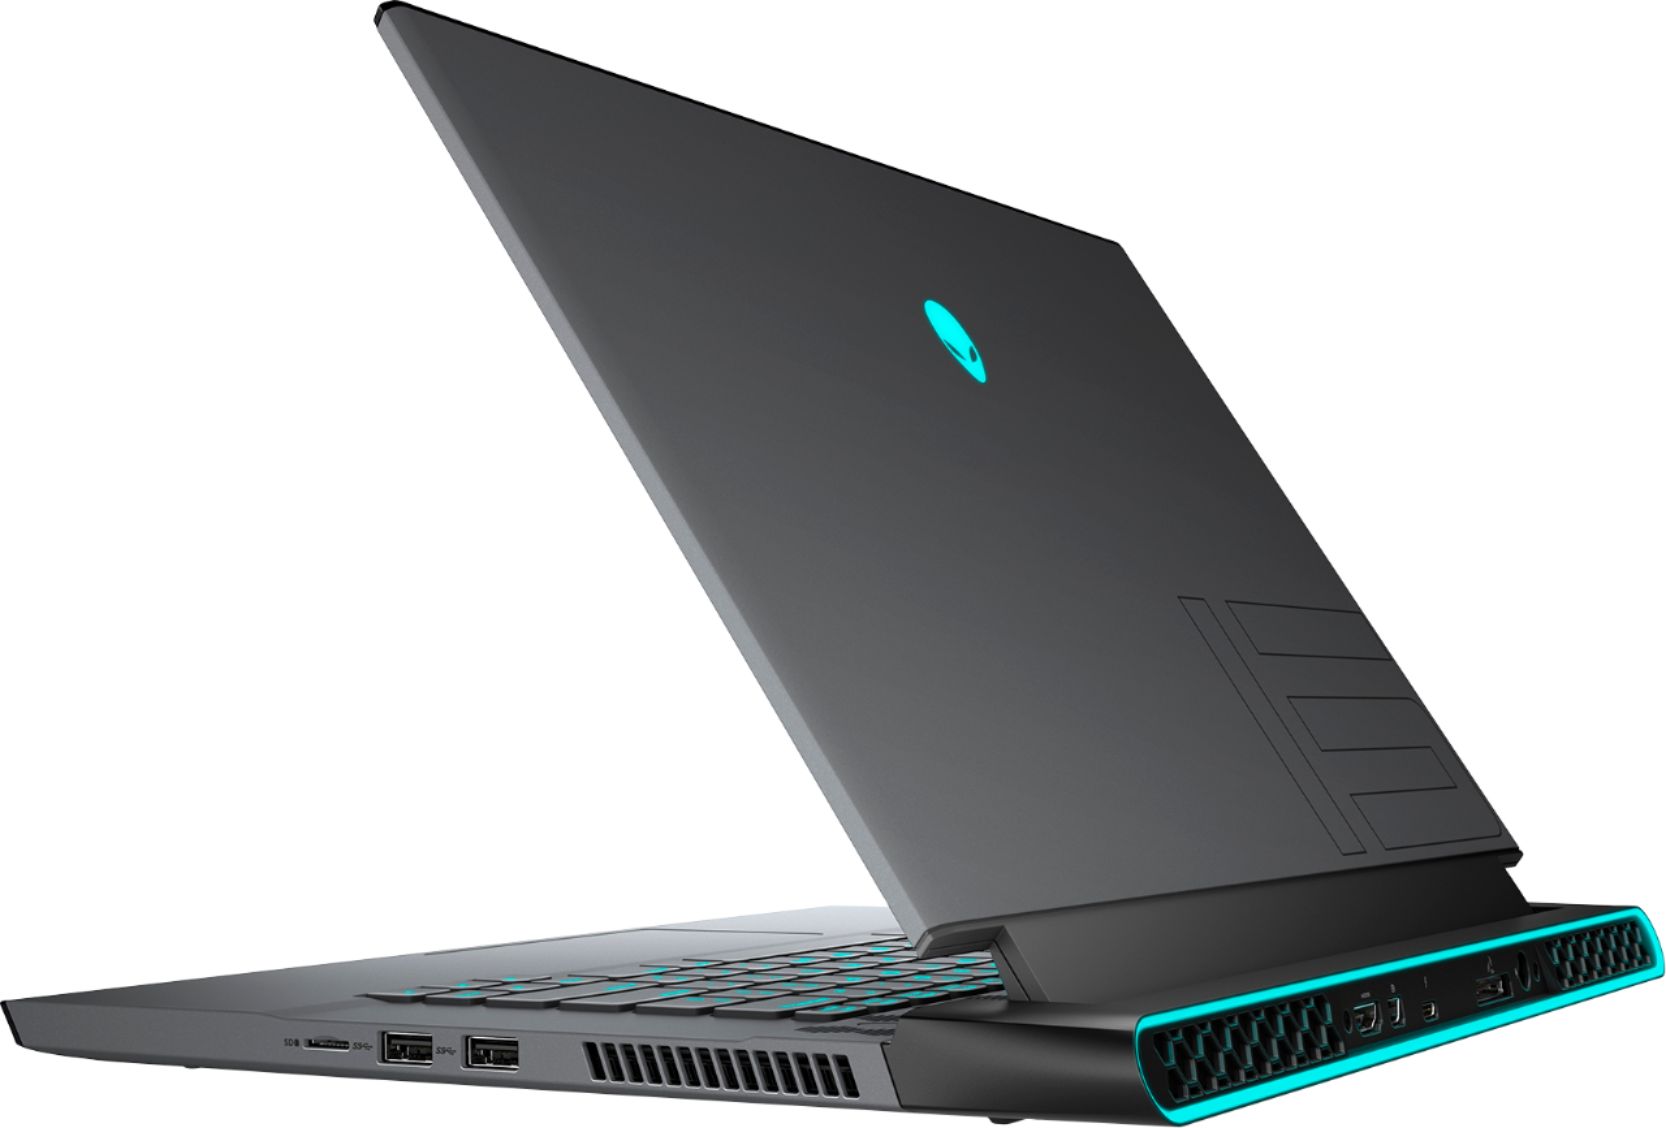 Dell Alienware m15 R3 Gaming and Entertainment Laptop (Intel i7-10750H 6-Core, 16GB RAM, 2x1TB PCIe SSD RAID 1 (1TB), 15.6" Full HD (1920x1080), NVIDIA RTX 2070 Super, Wifi, Bluetooth, Win 10 Pro) - image 5 of 6